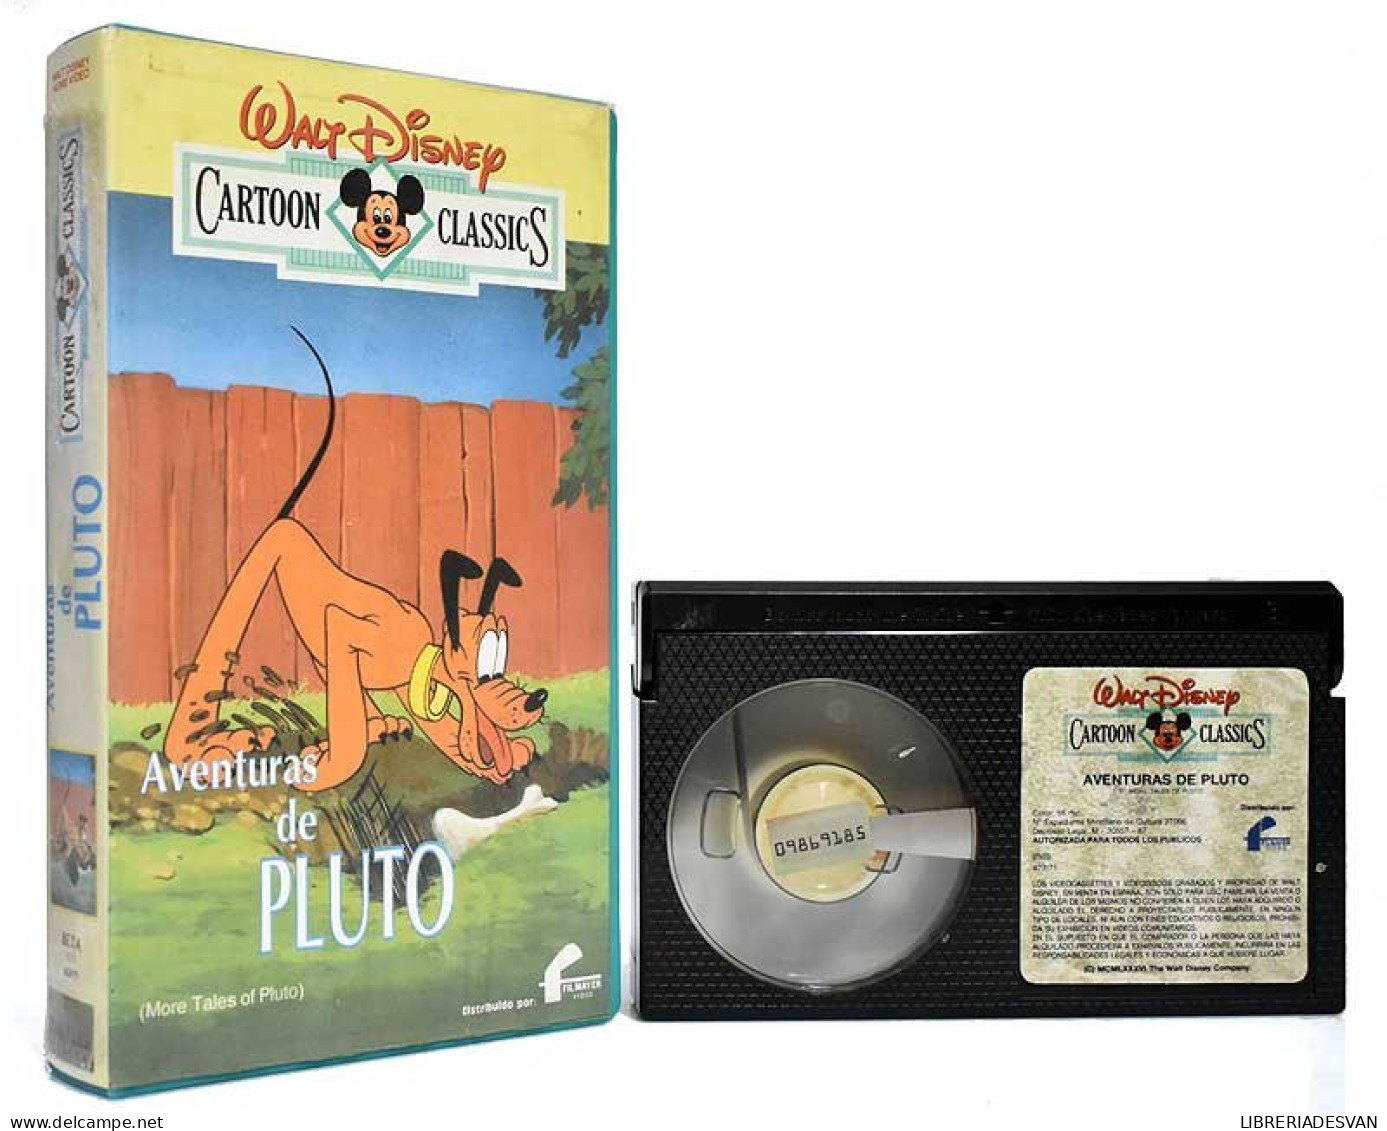 Aventuras De Pluto. Walt Disney. Cartoon Classics. Beta - Other Formats